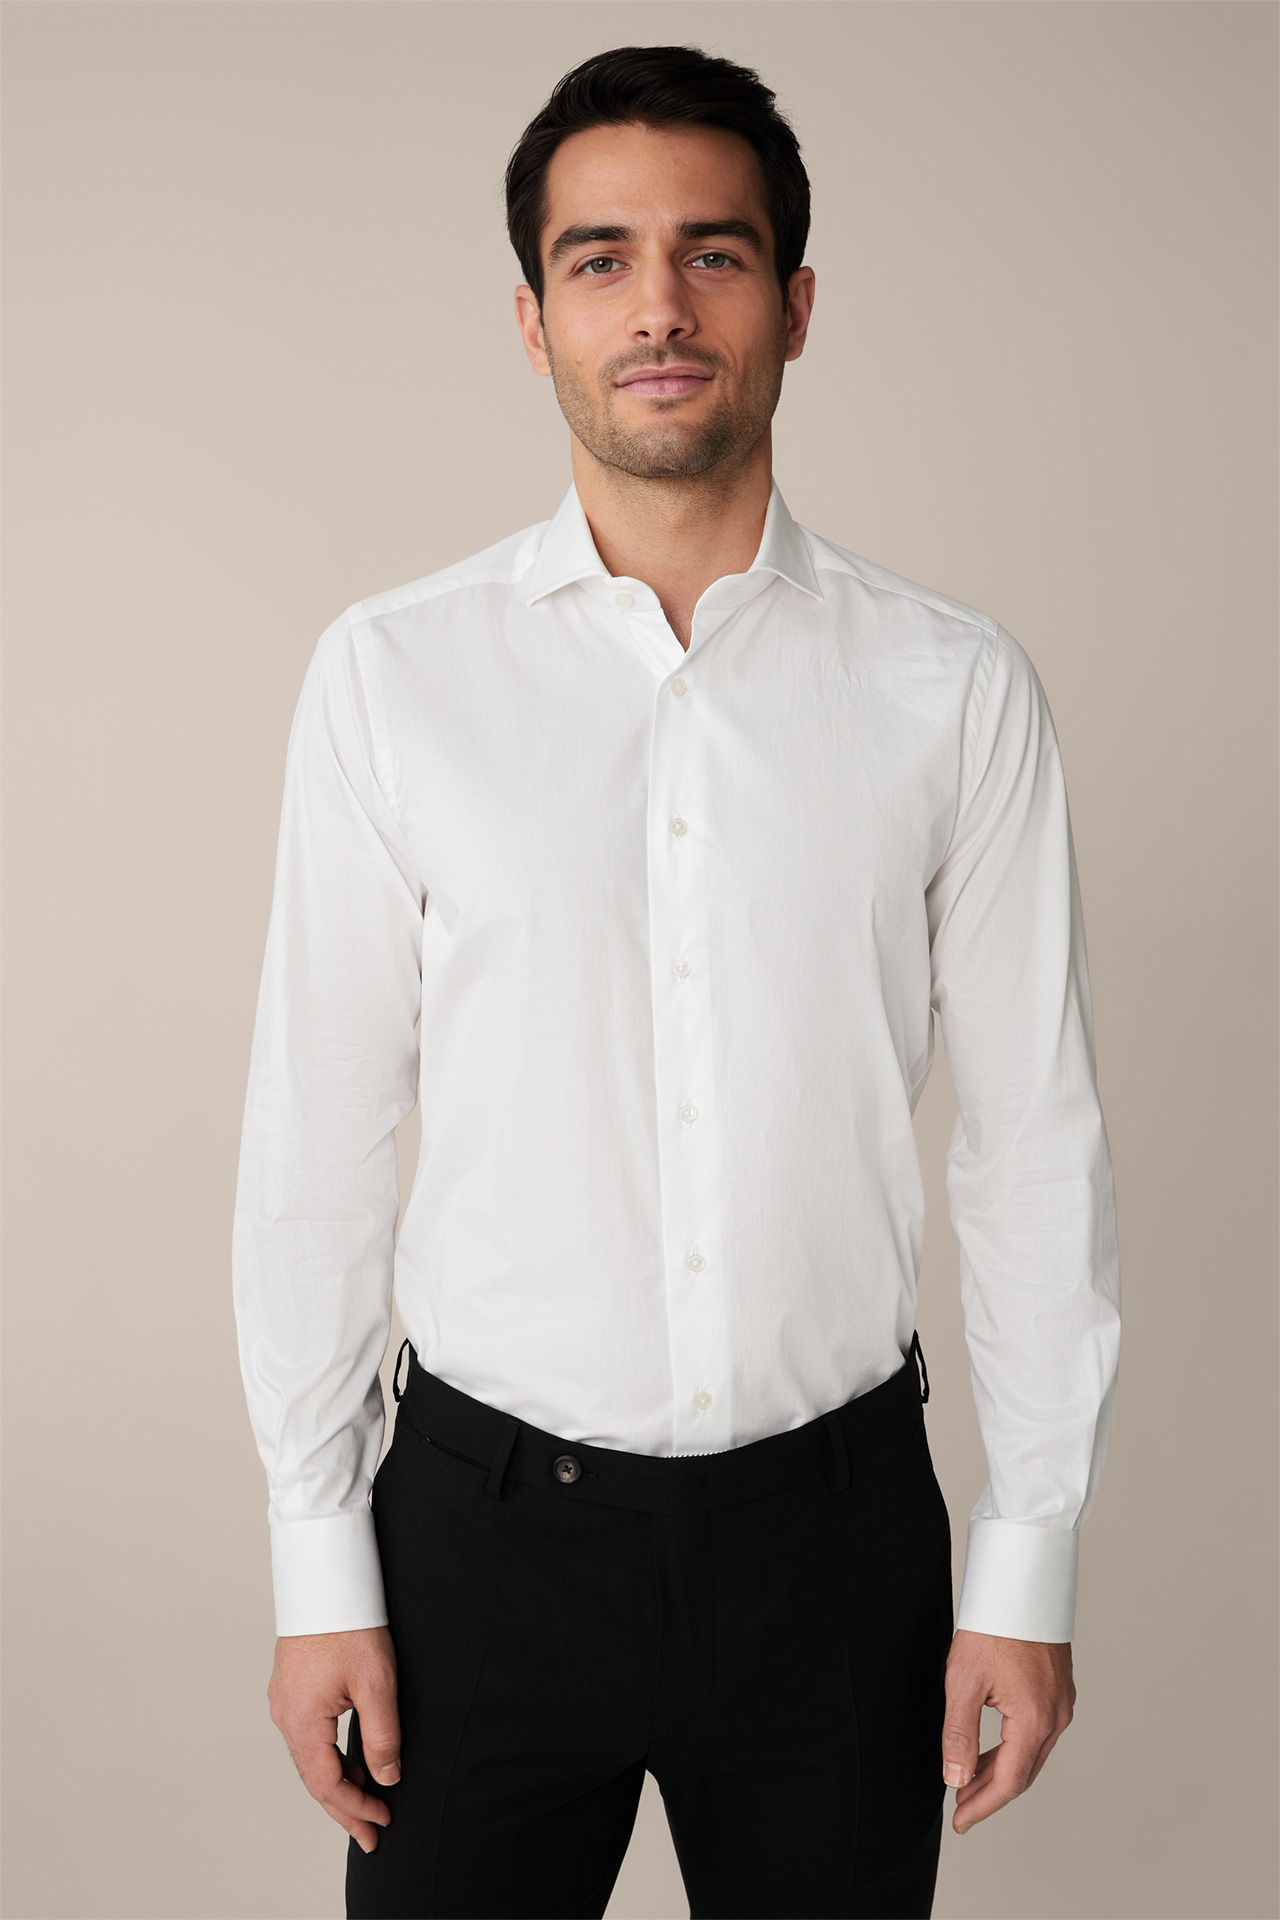 Trivo twill shirt in white